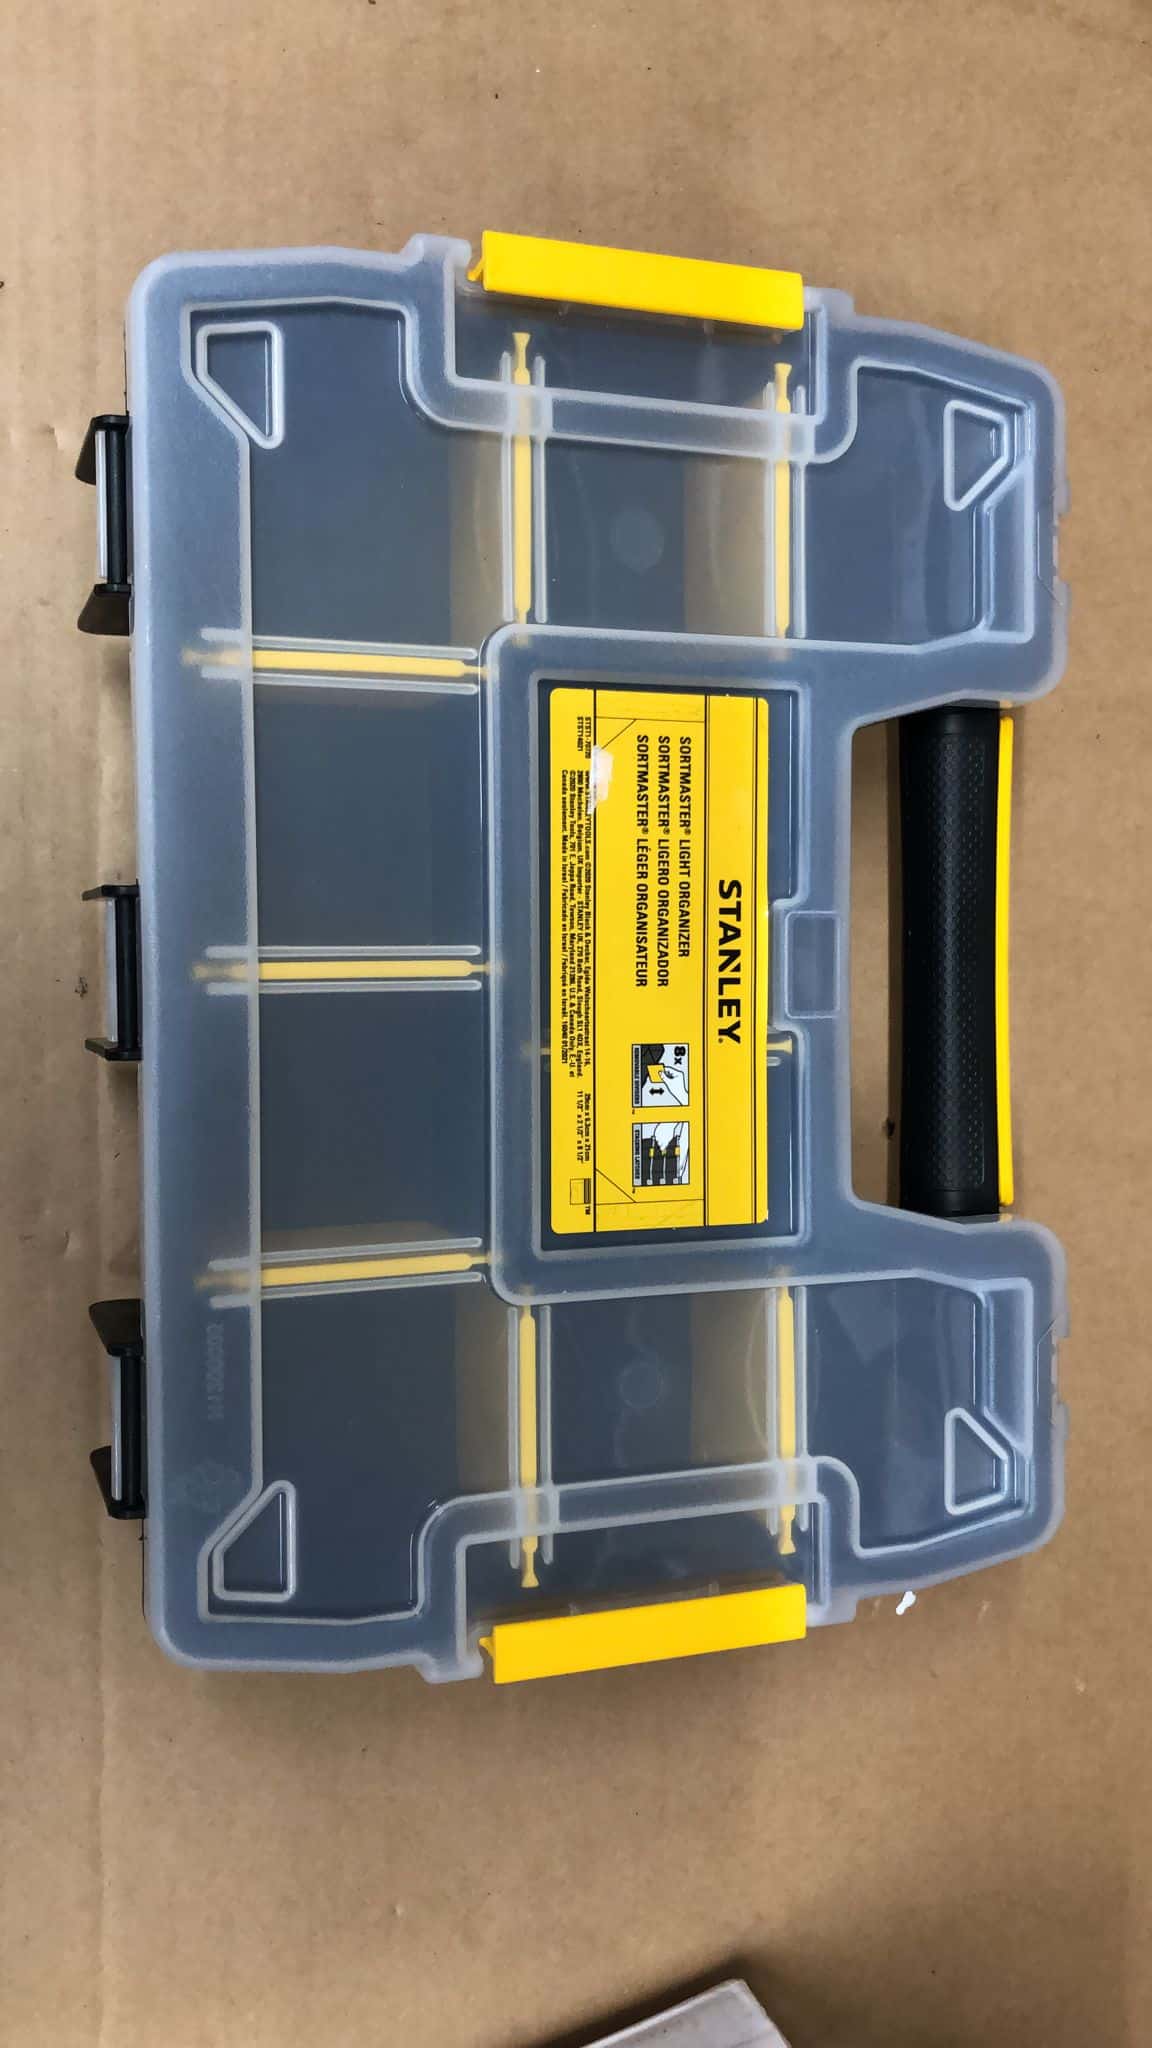 Stanley Sortmaster Black & yellow 10 compartment Organiser 7209